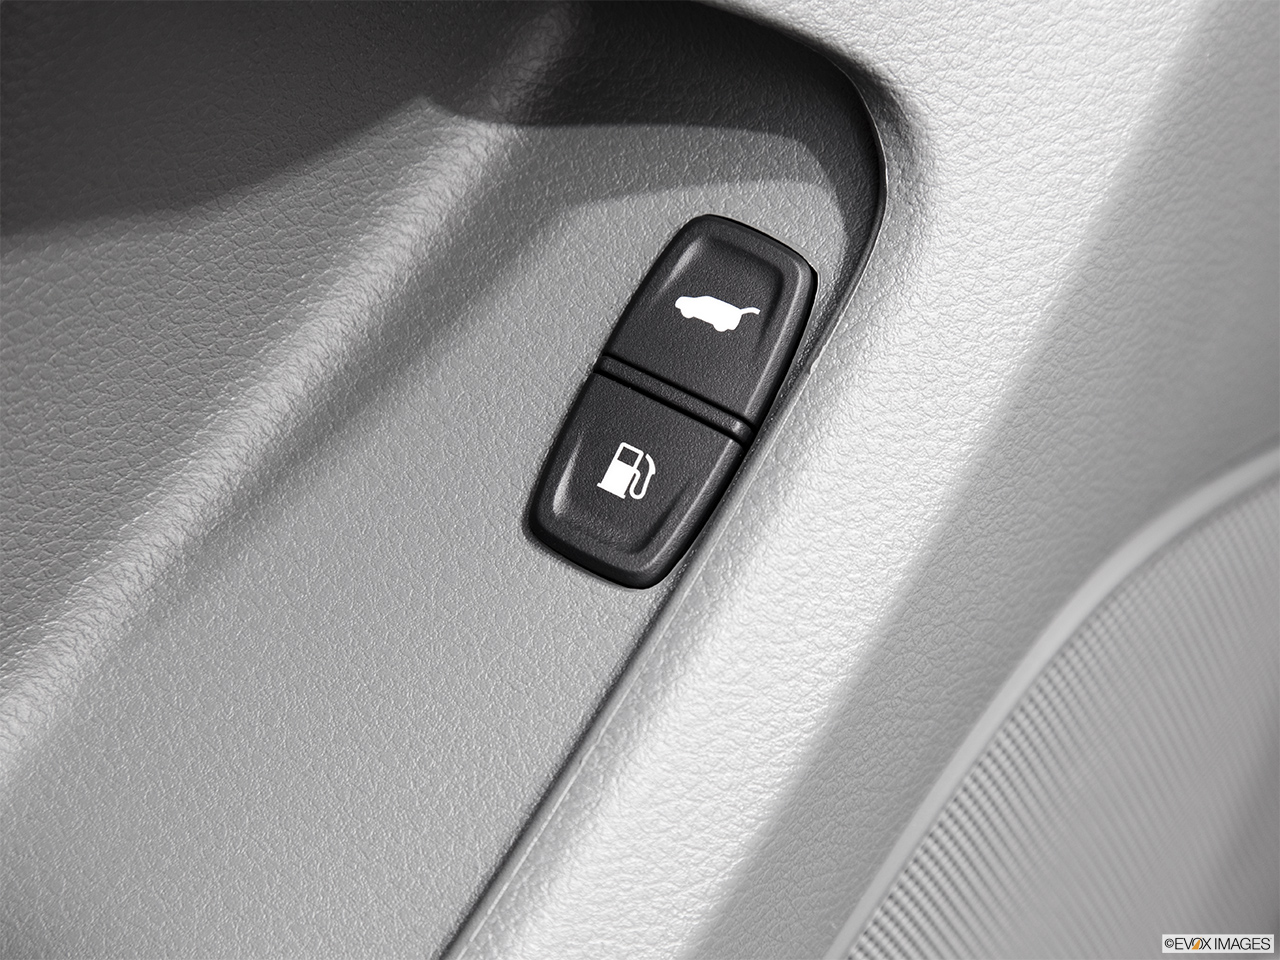 2014 Acura MDX SH-AWD Gas cap release. 